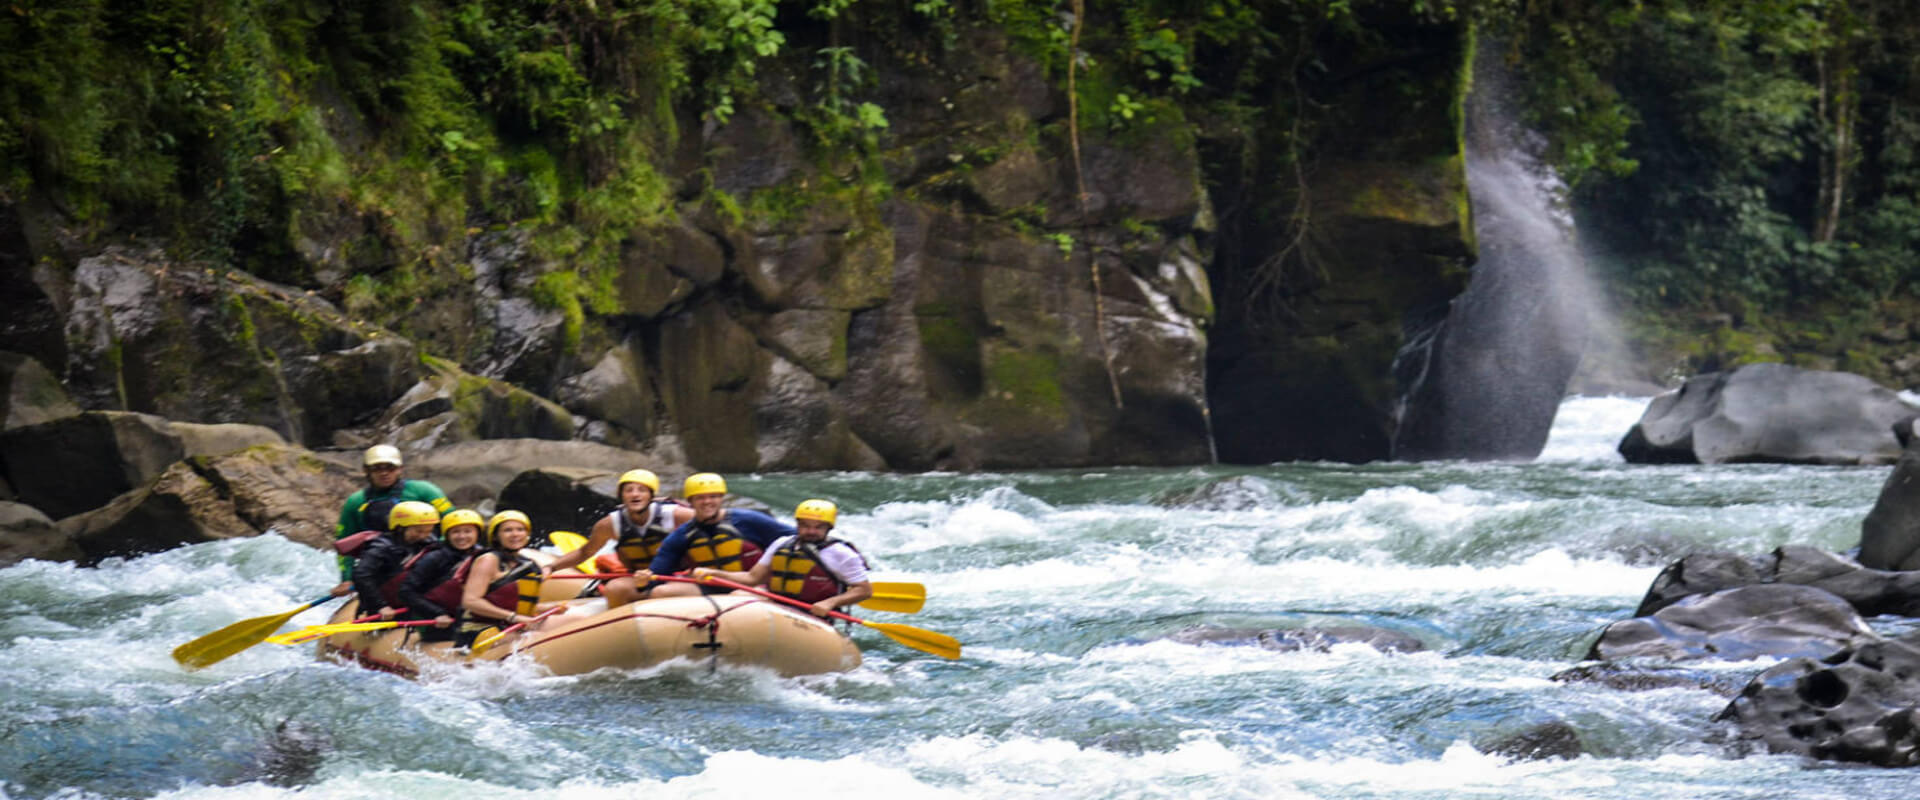 Tortuguero + Pacuare River Rafting - 4 days trip | Costa Rica Jade Tours